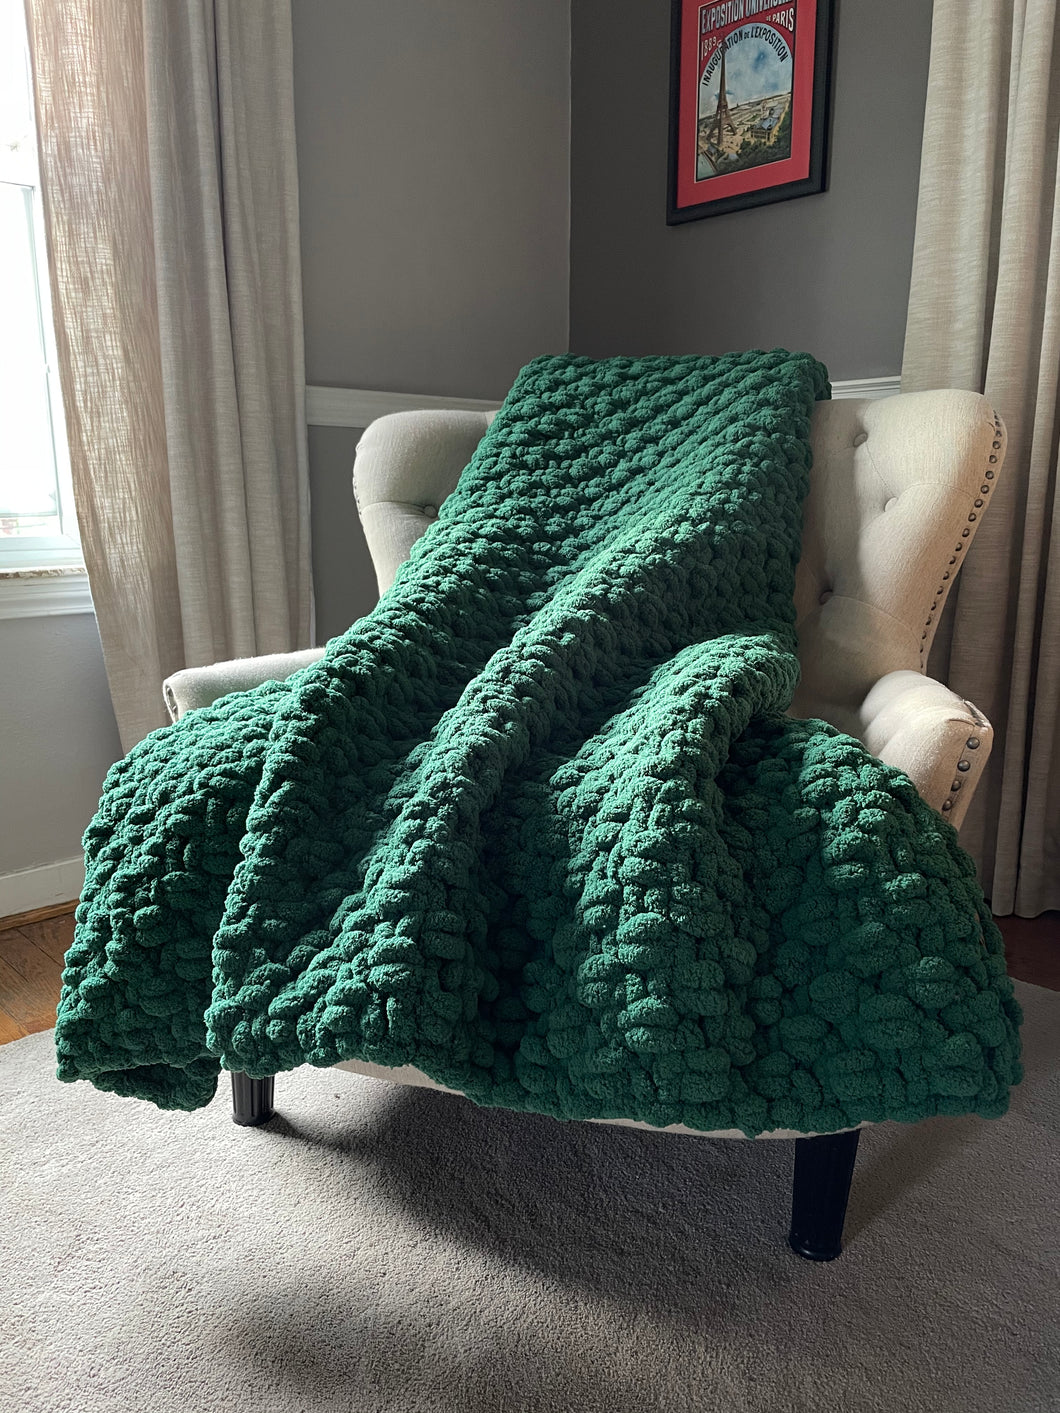 Forest Green Blanket | Chunky Knit Blanket - Hands On For Homemade